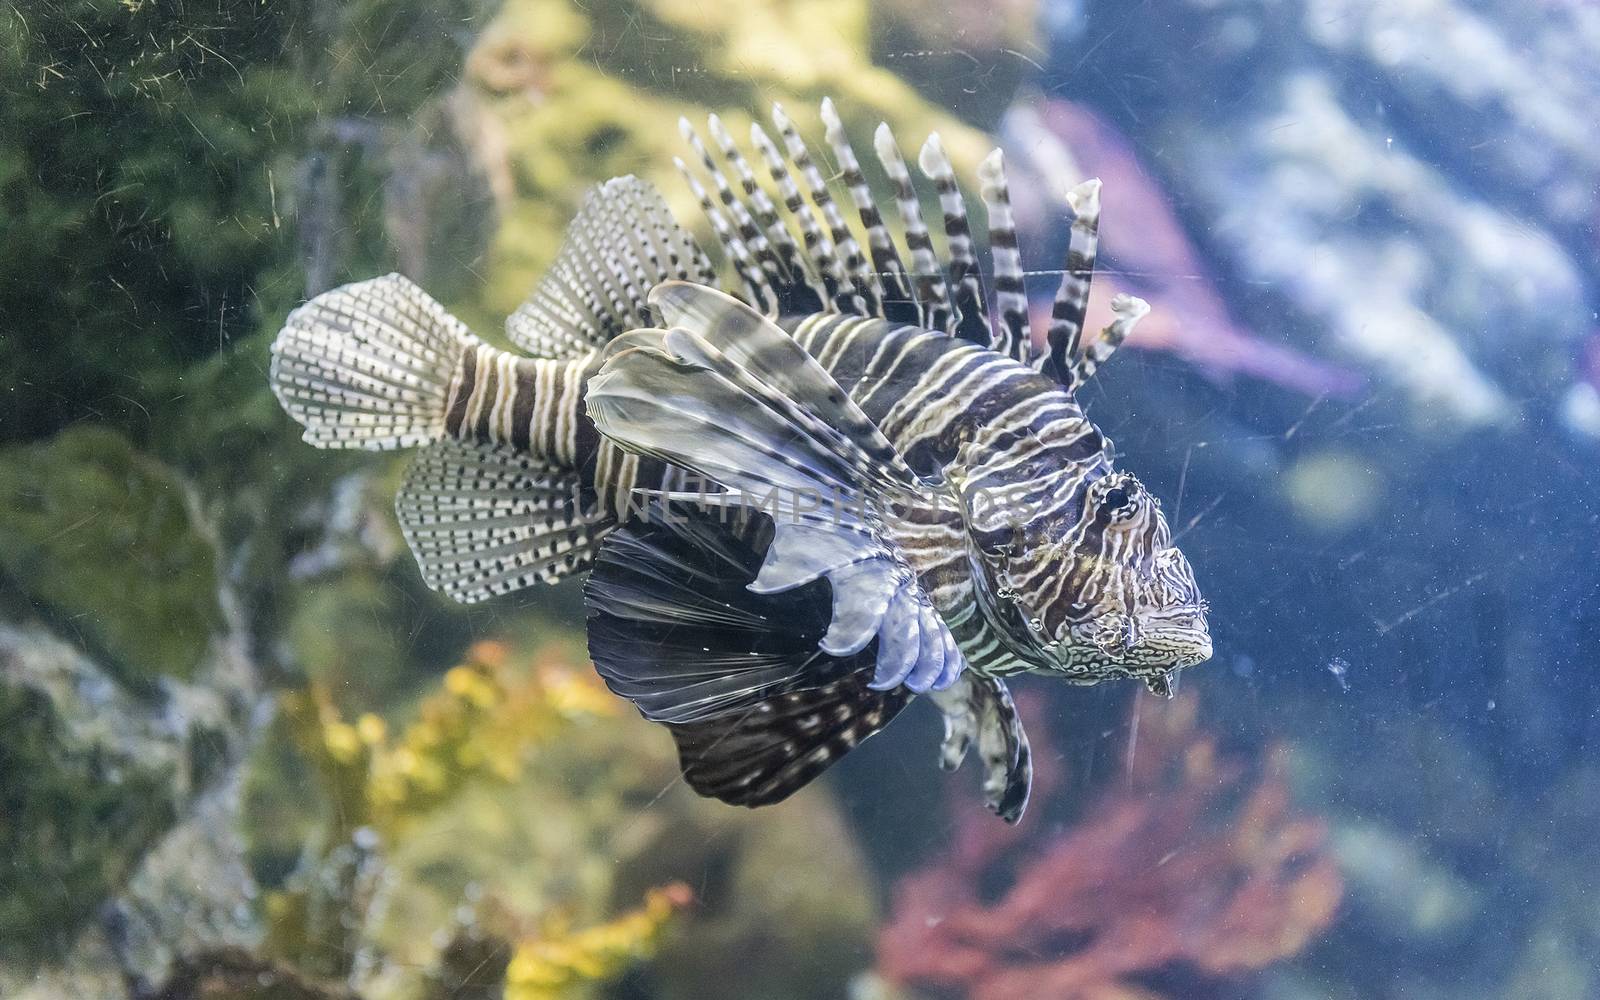 Closeup of a lionfish in aquarium environment by marcorubino